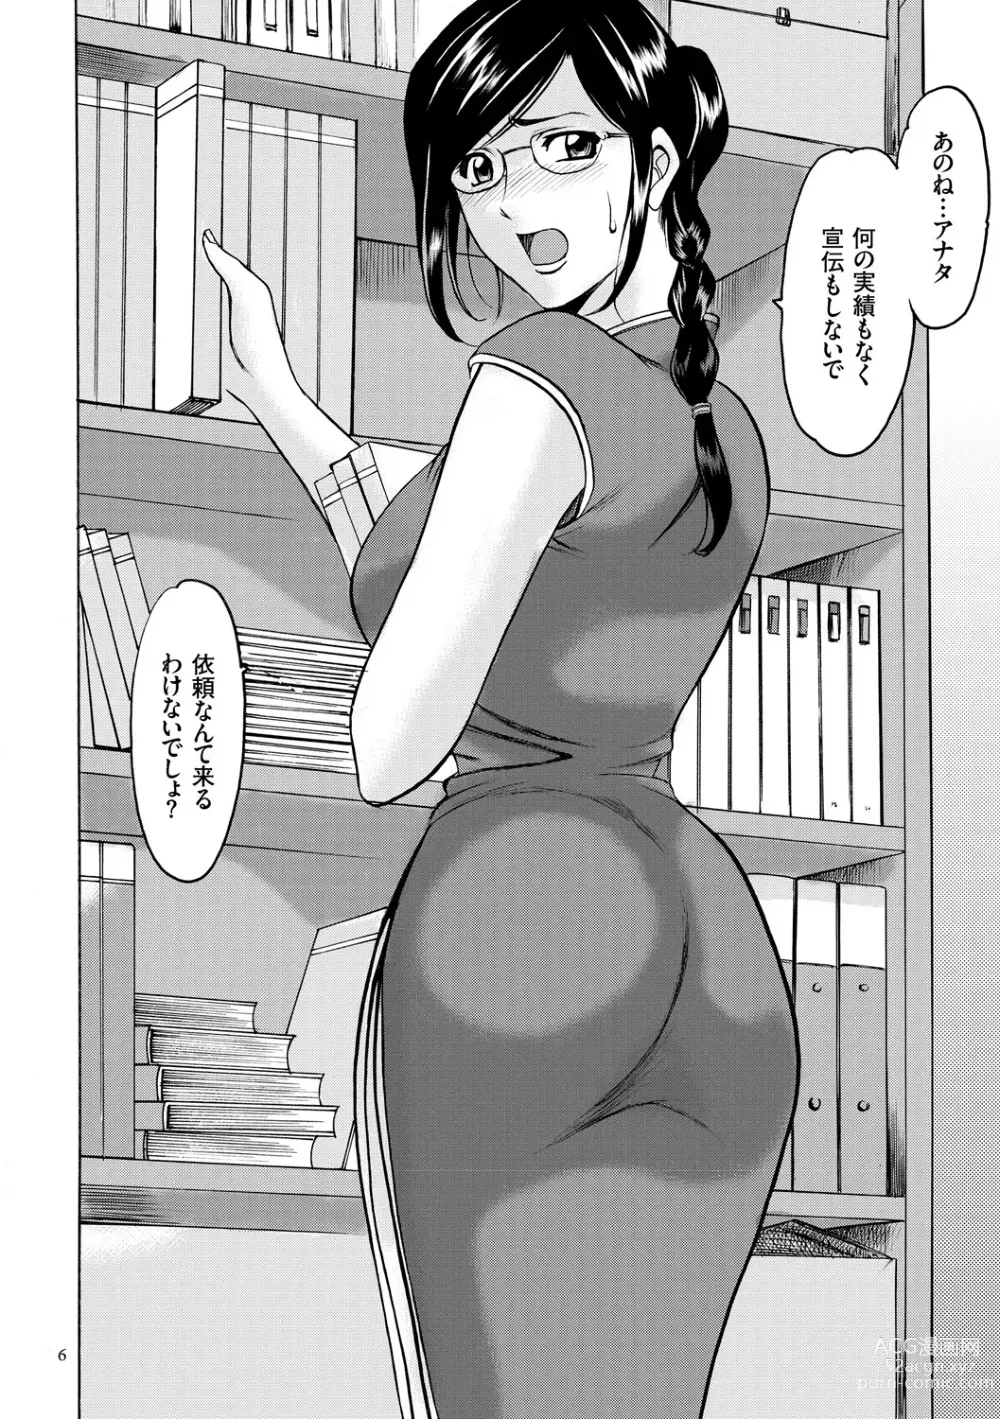 Page 6 of manga Sennyu Tsuma Satomi Kiroku